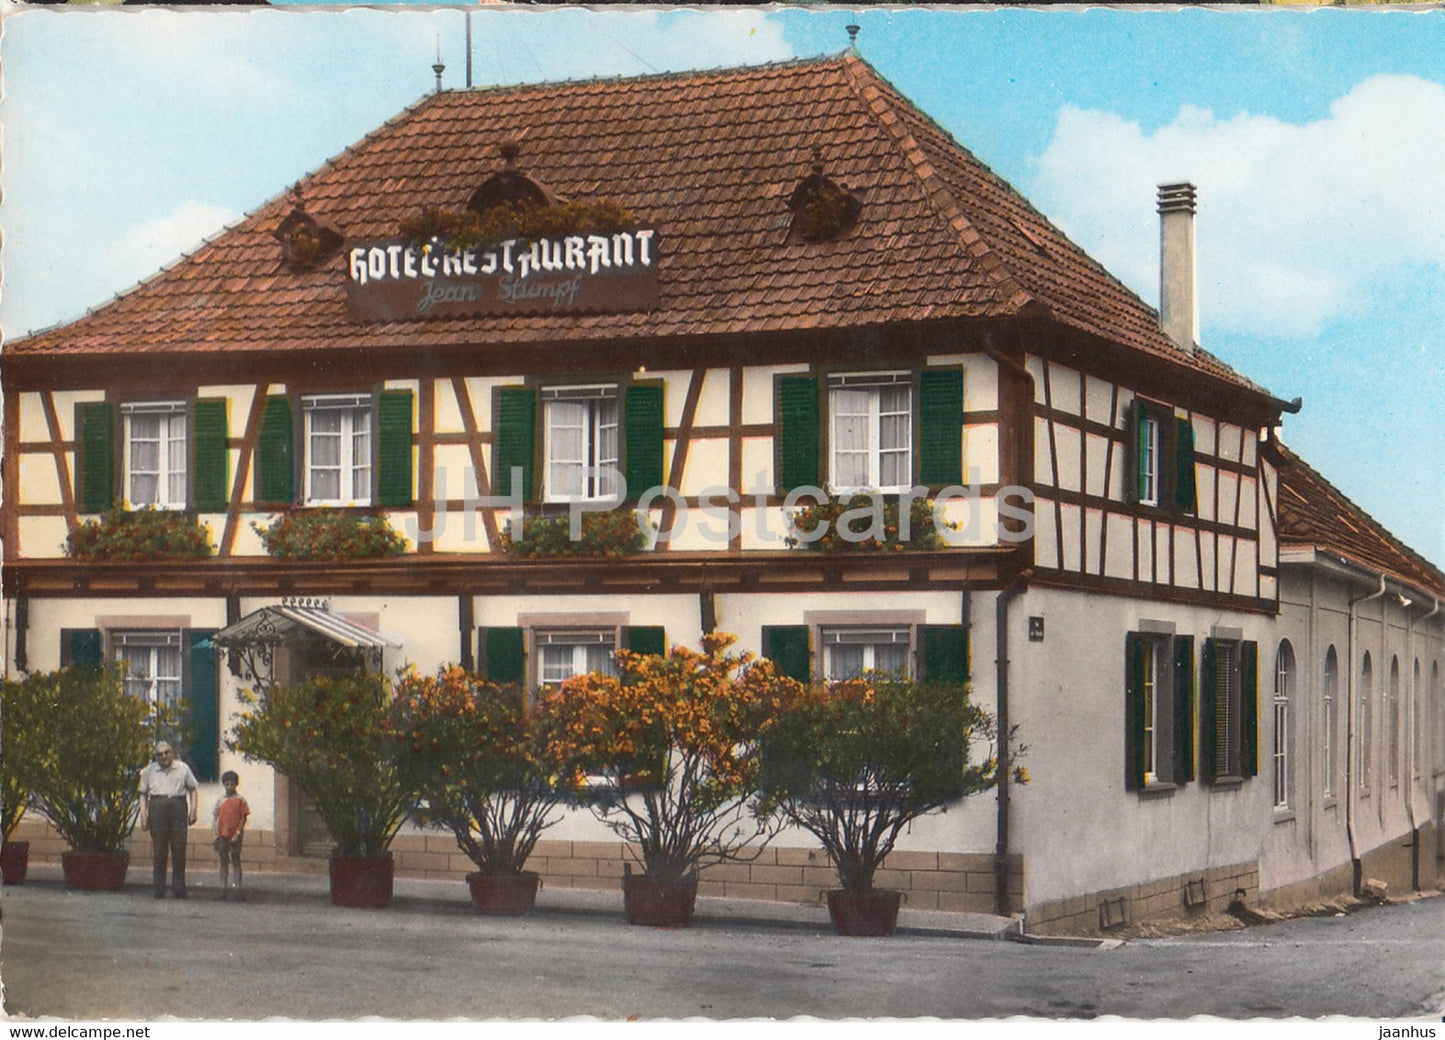 Epfig - hotel restaurant Jean Stumpf - France - unused - JH Postcards